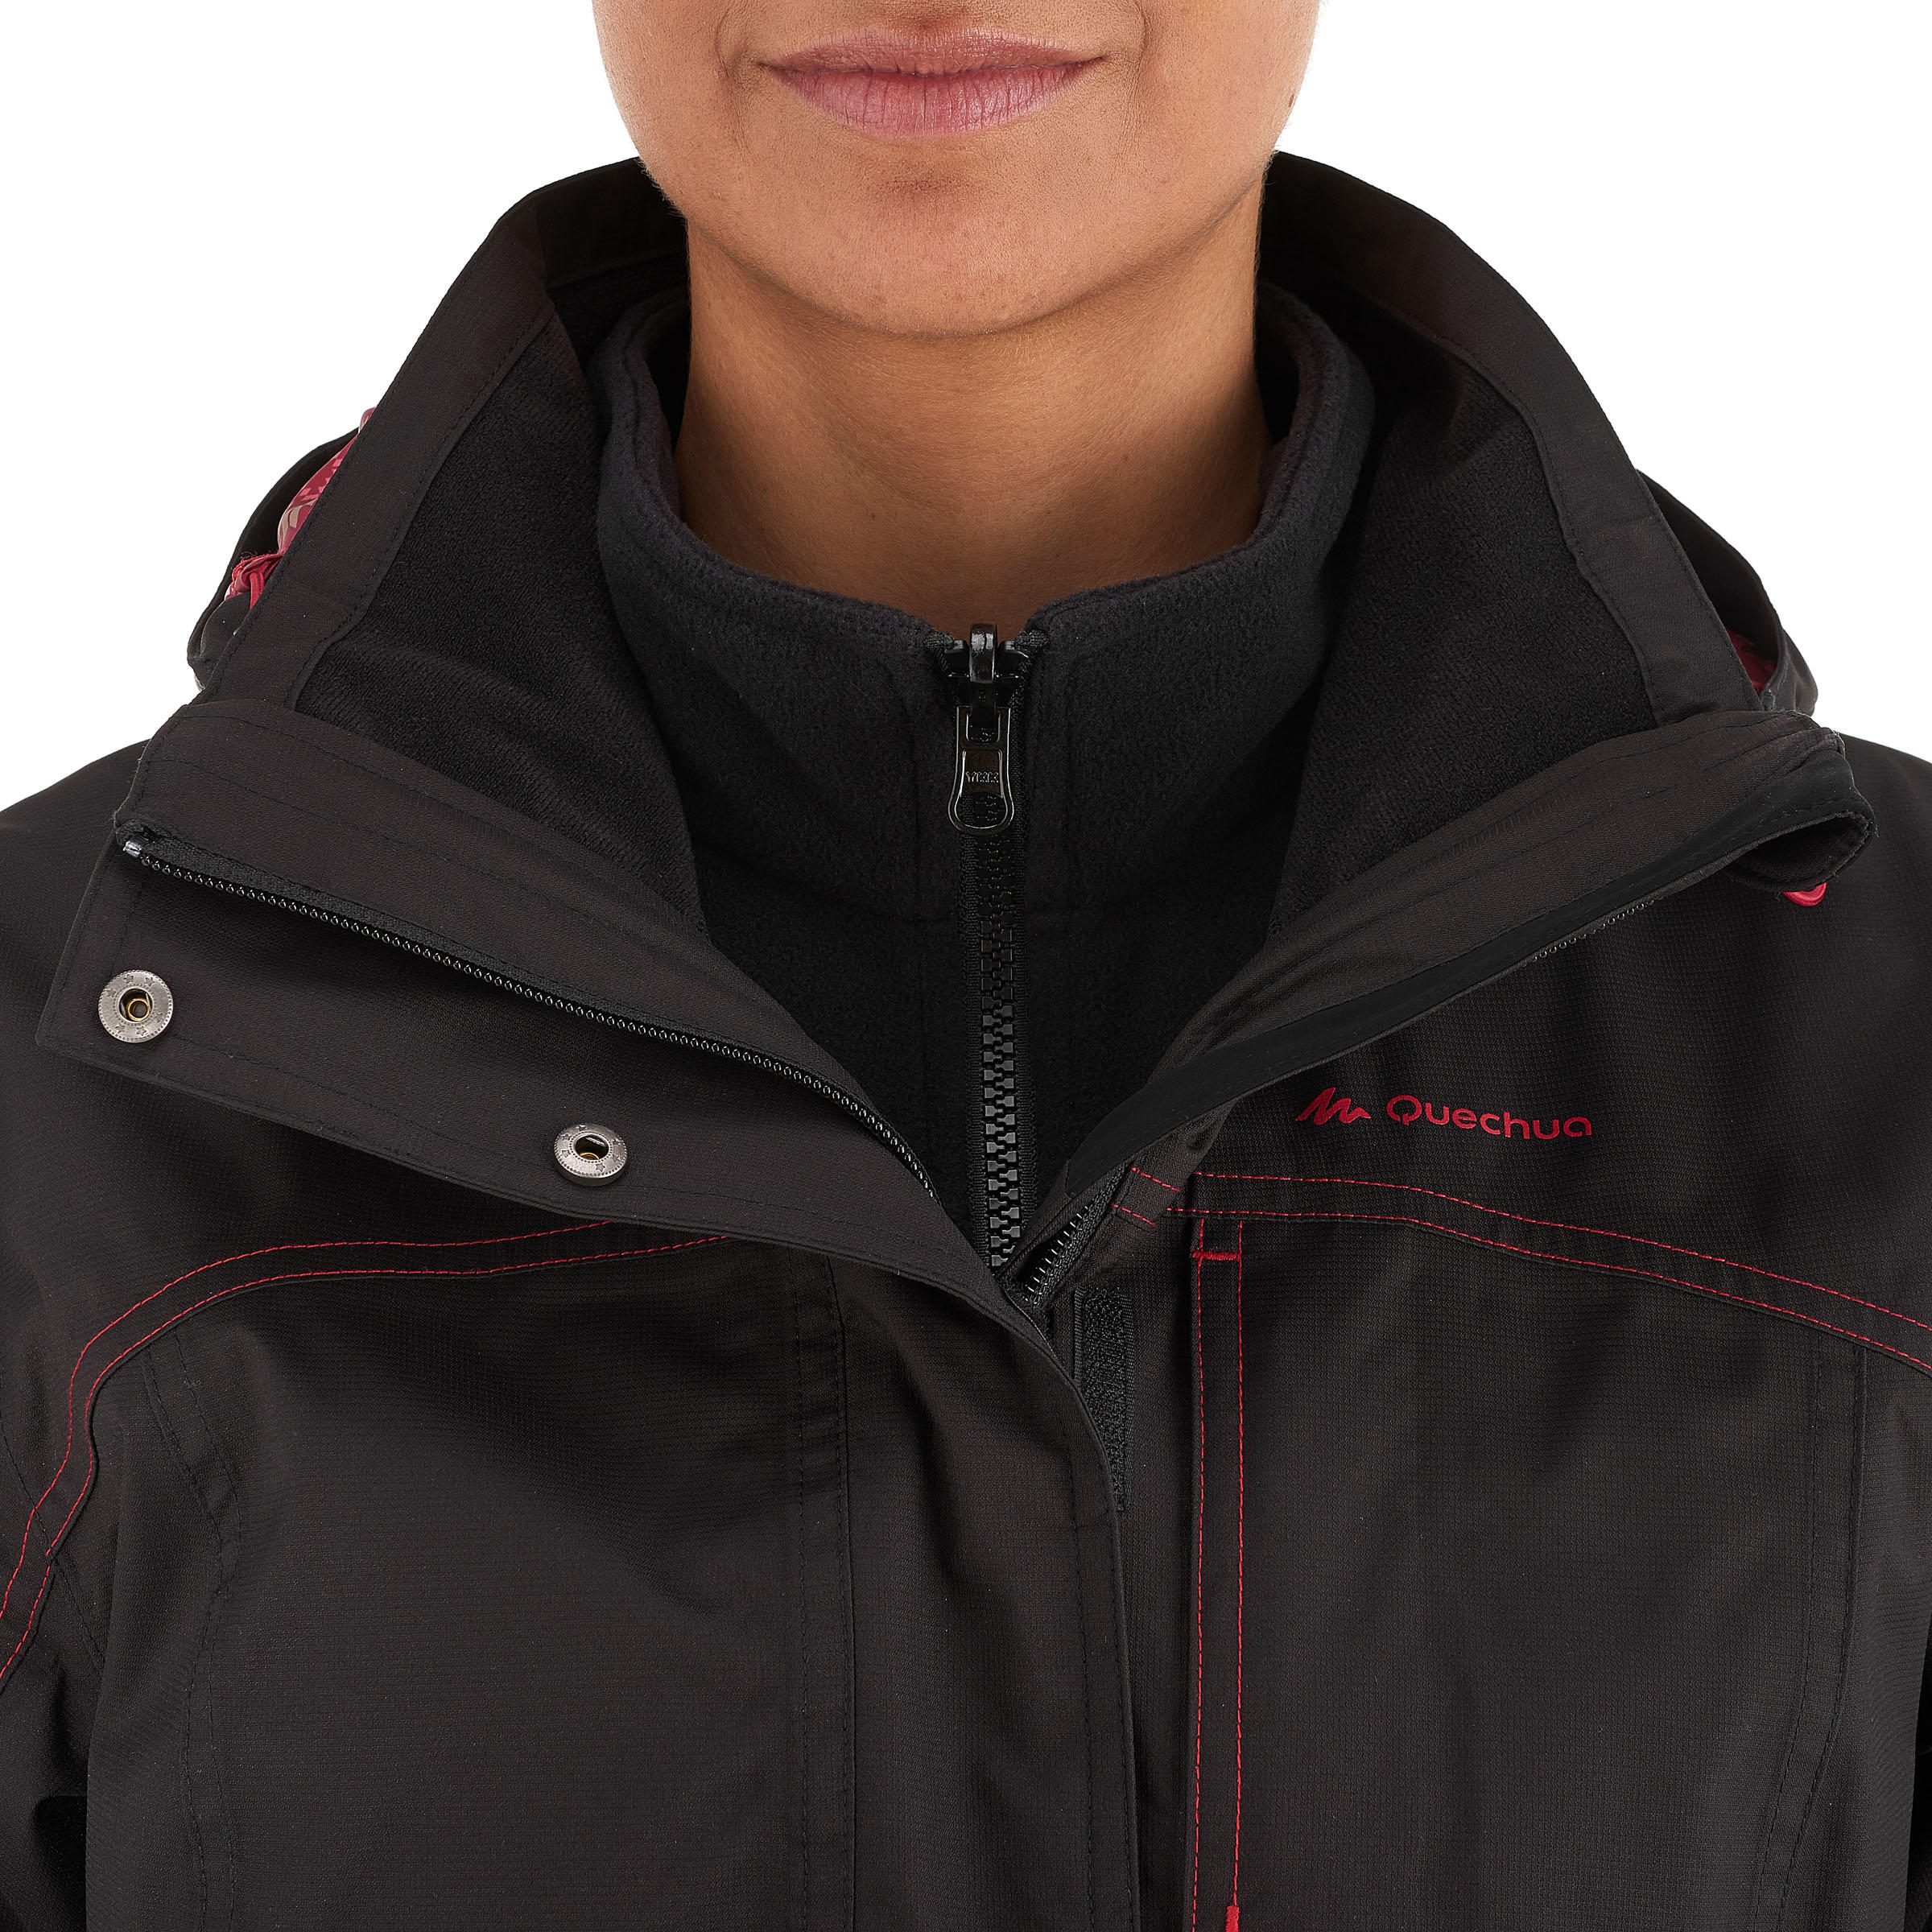 Rainwarm 100 Women's 3-in-1 Trekking Jacket - Black 26/26